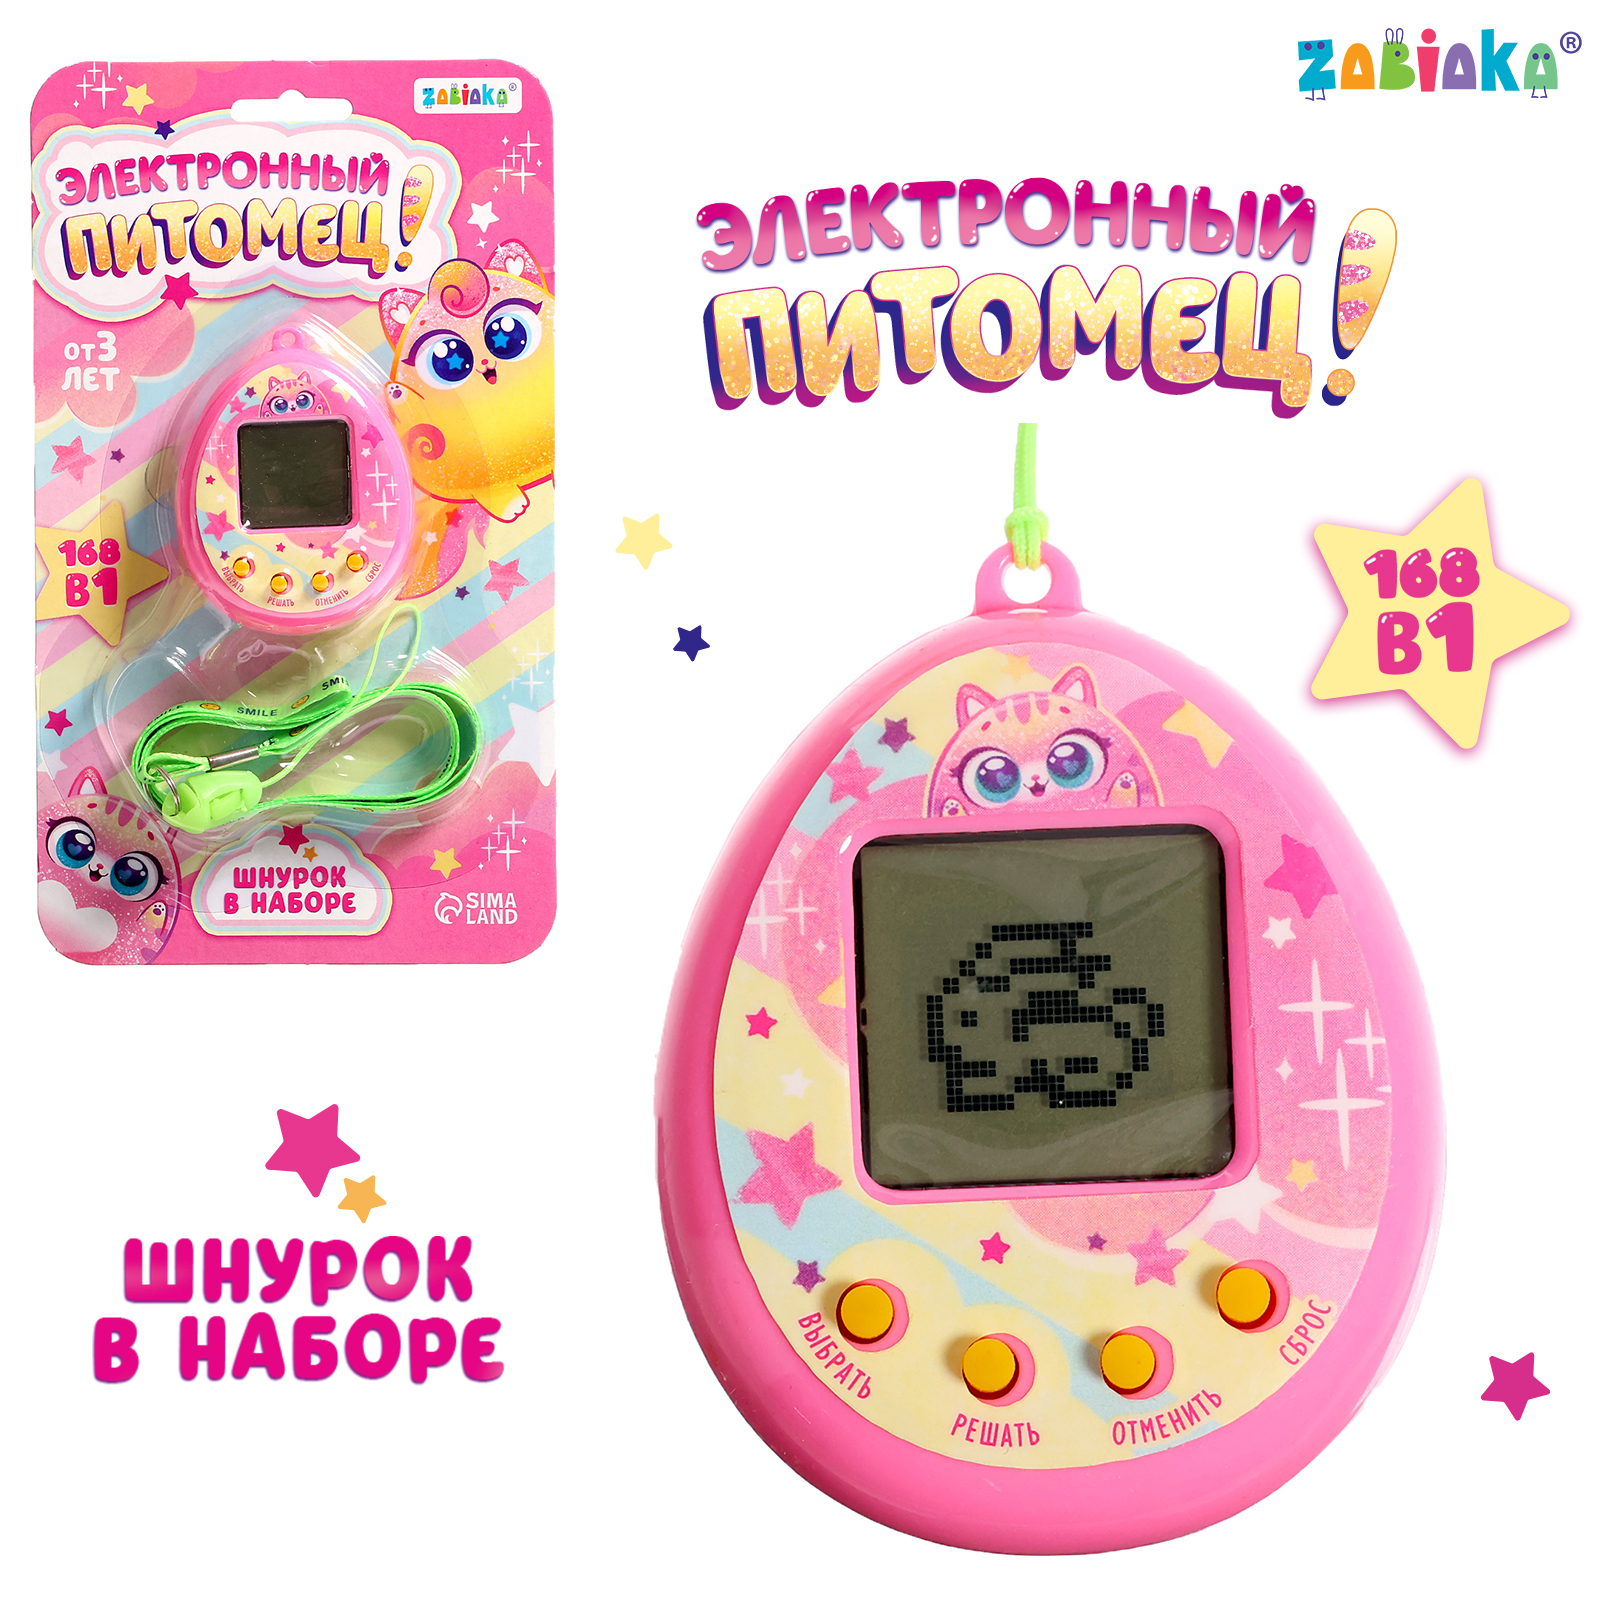 Интерактивная игрушка ZABIAKA Электронный питомец, 168 в 1, розовый электронный виртуальной питомец mypads t12 тамагочи 146709 189289